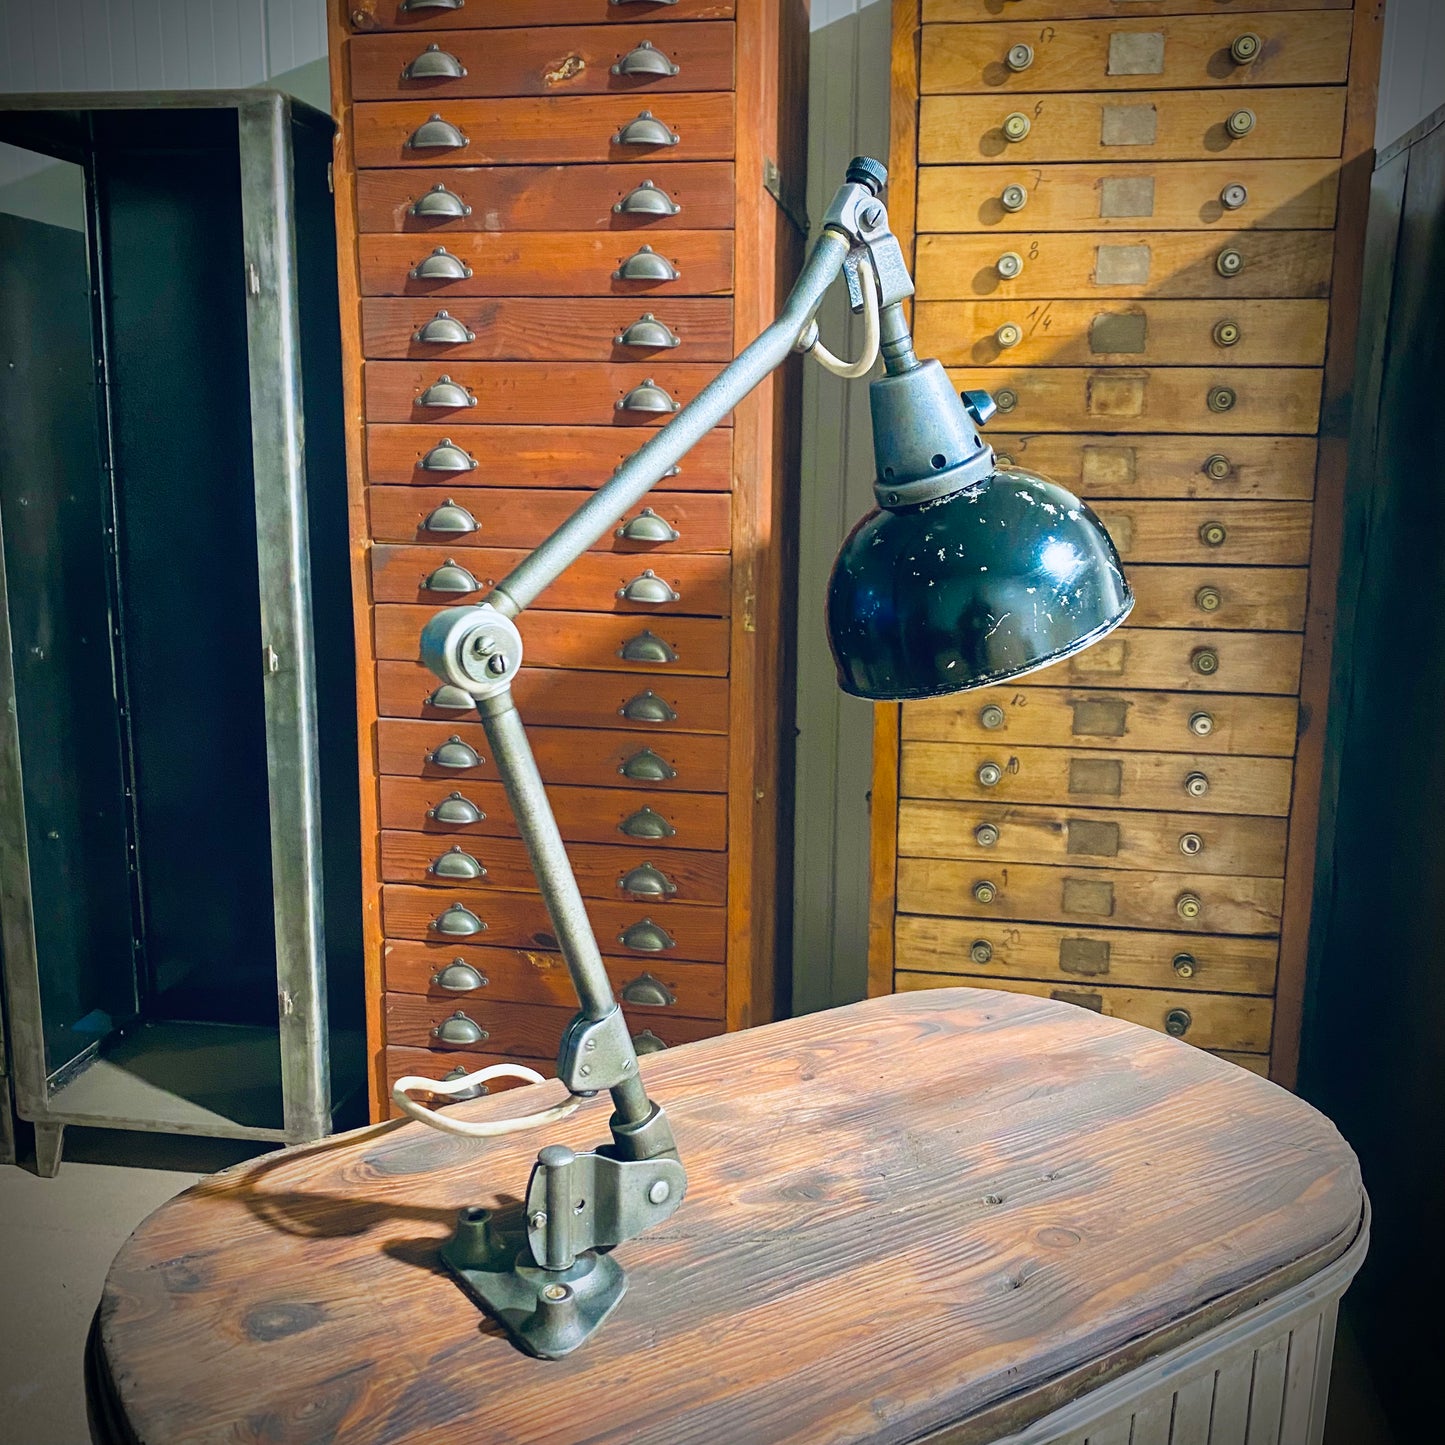 D.G.R.M Midgard Table / Desk Lamp by Curt Fischer, Circa 1930s